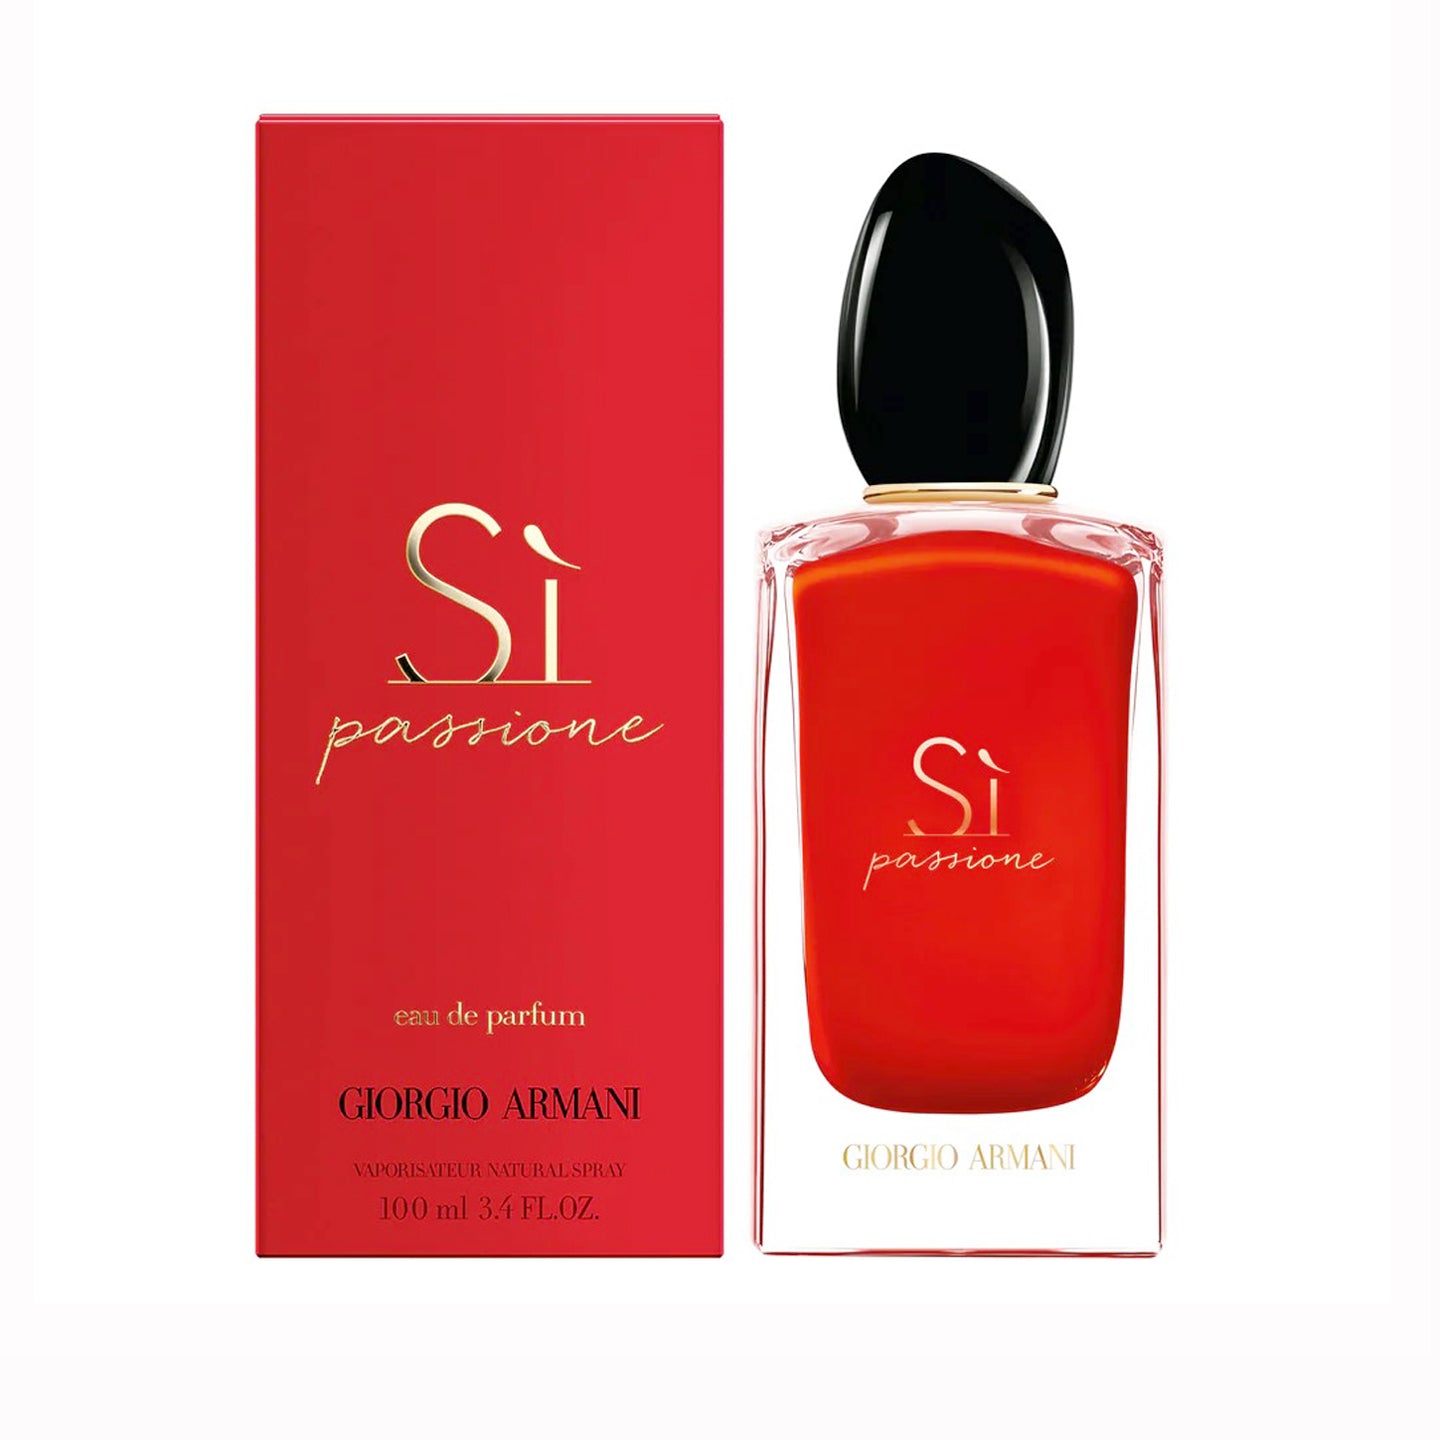 Giorgio Armani Si Passione Eau de Parfum Spray for Women